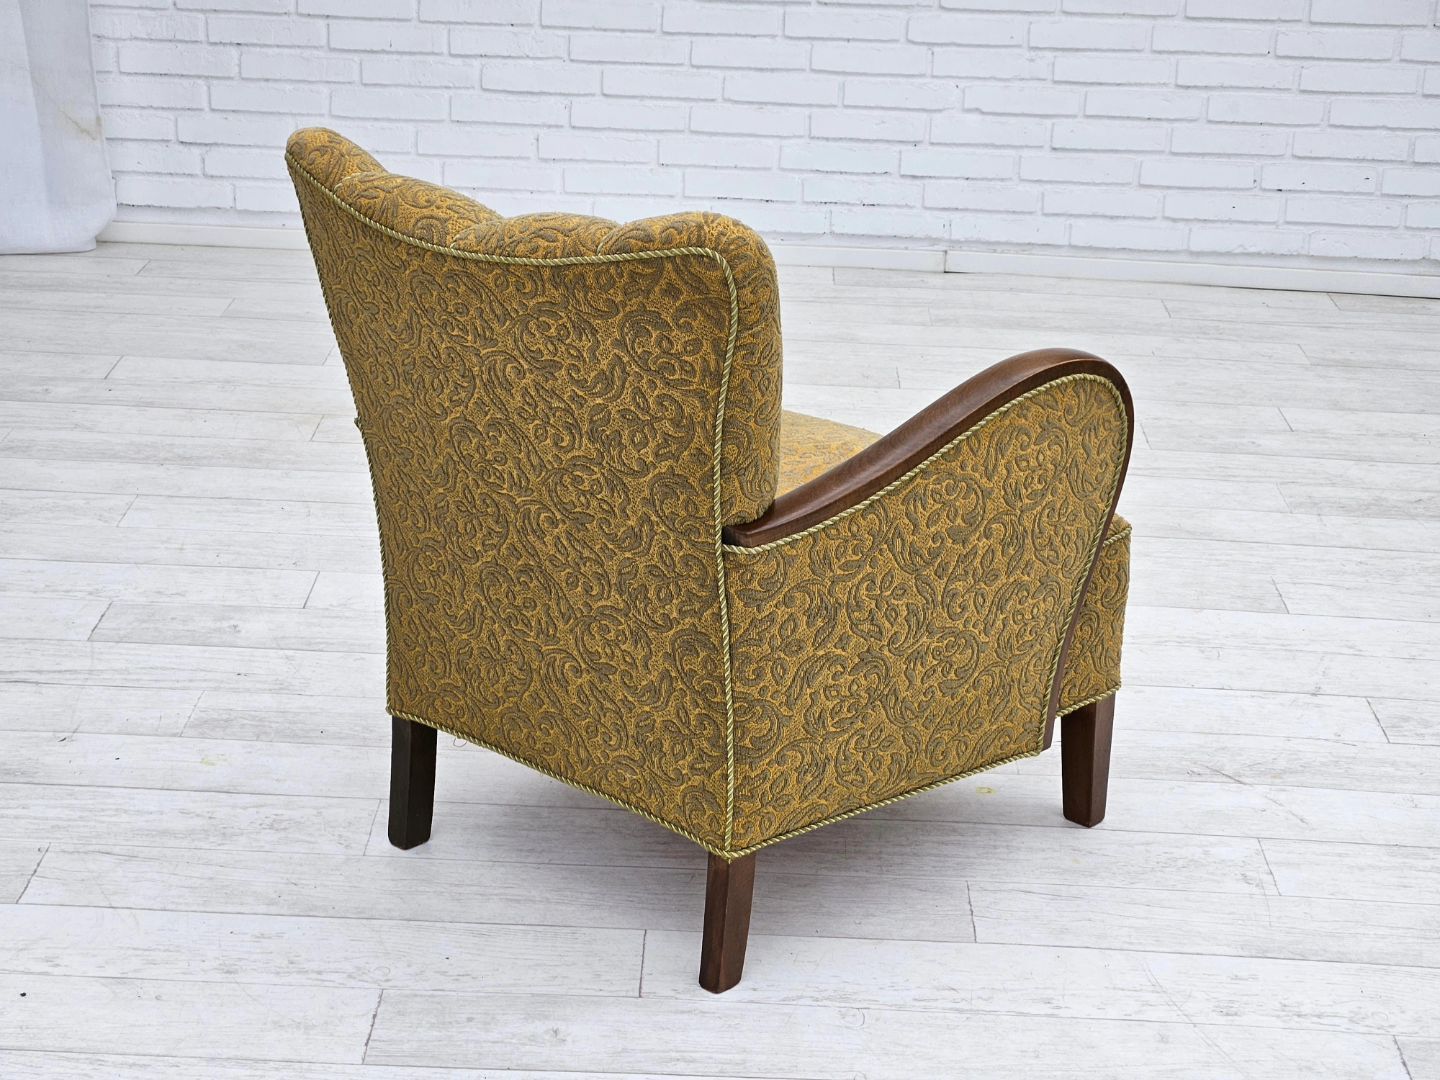 1950-60s, Danish design, armchair, original very good condition.